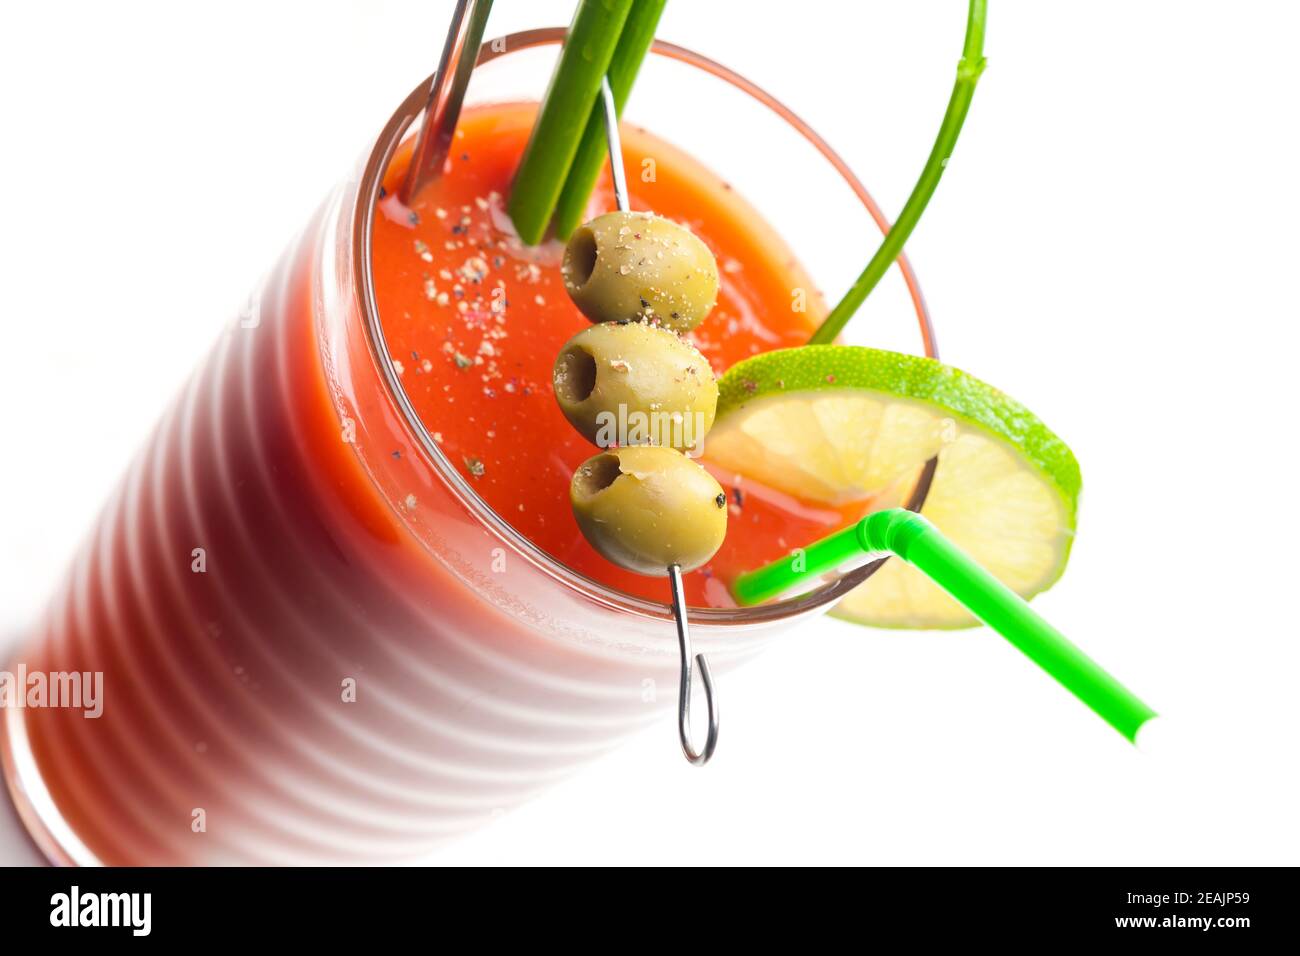 Blutiger mary Cocktail aus Tomatensaft und Alkohol Stockfoto